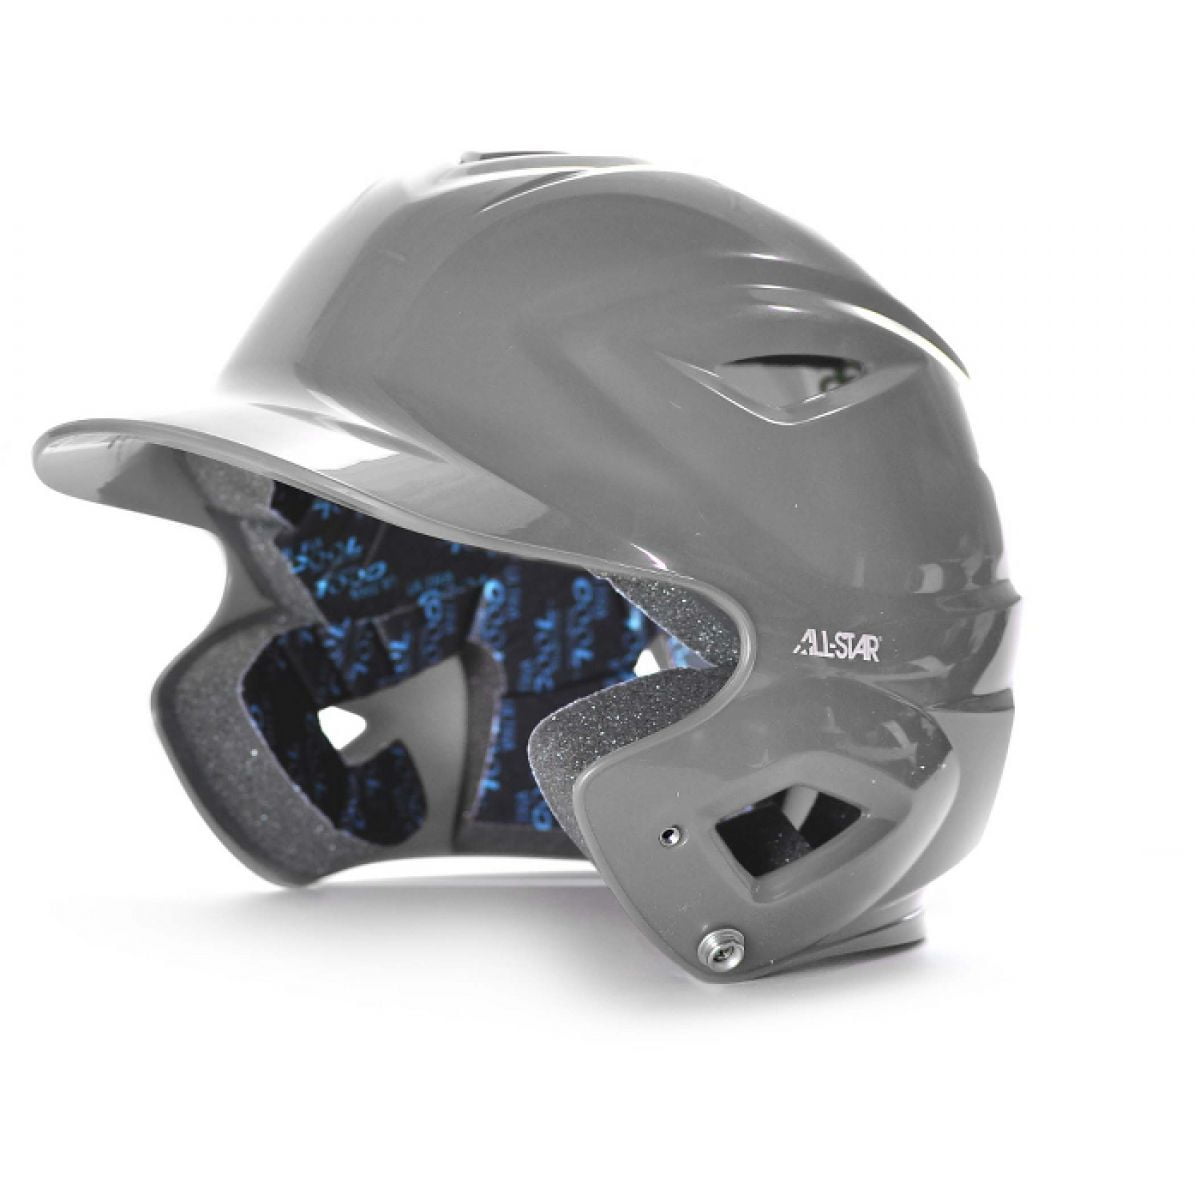 All-Star Youth System 7 Solid Molded Batting Helmet 